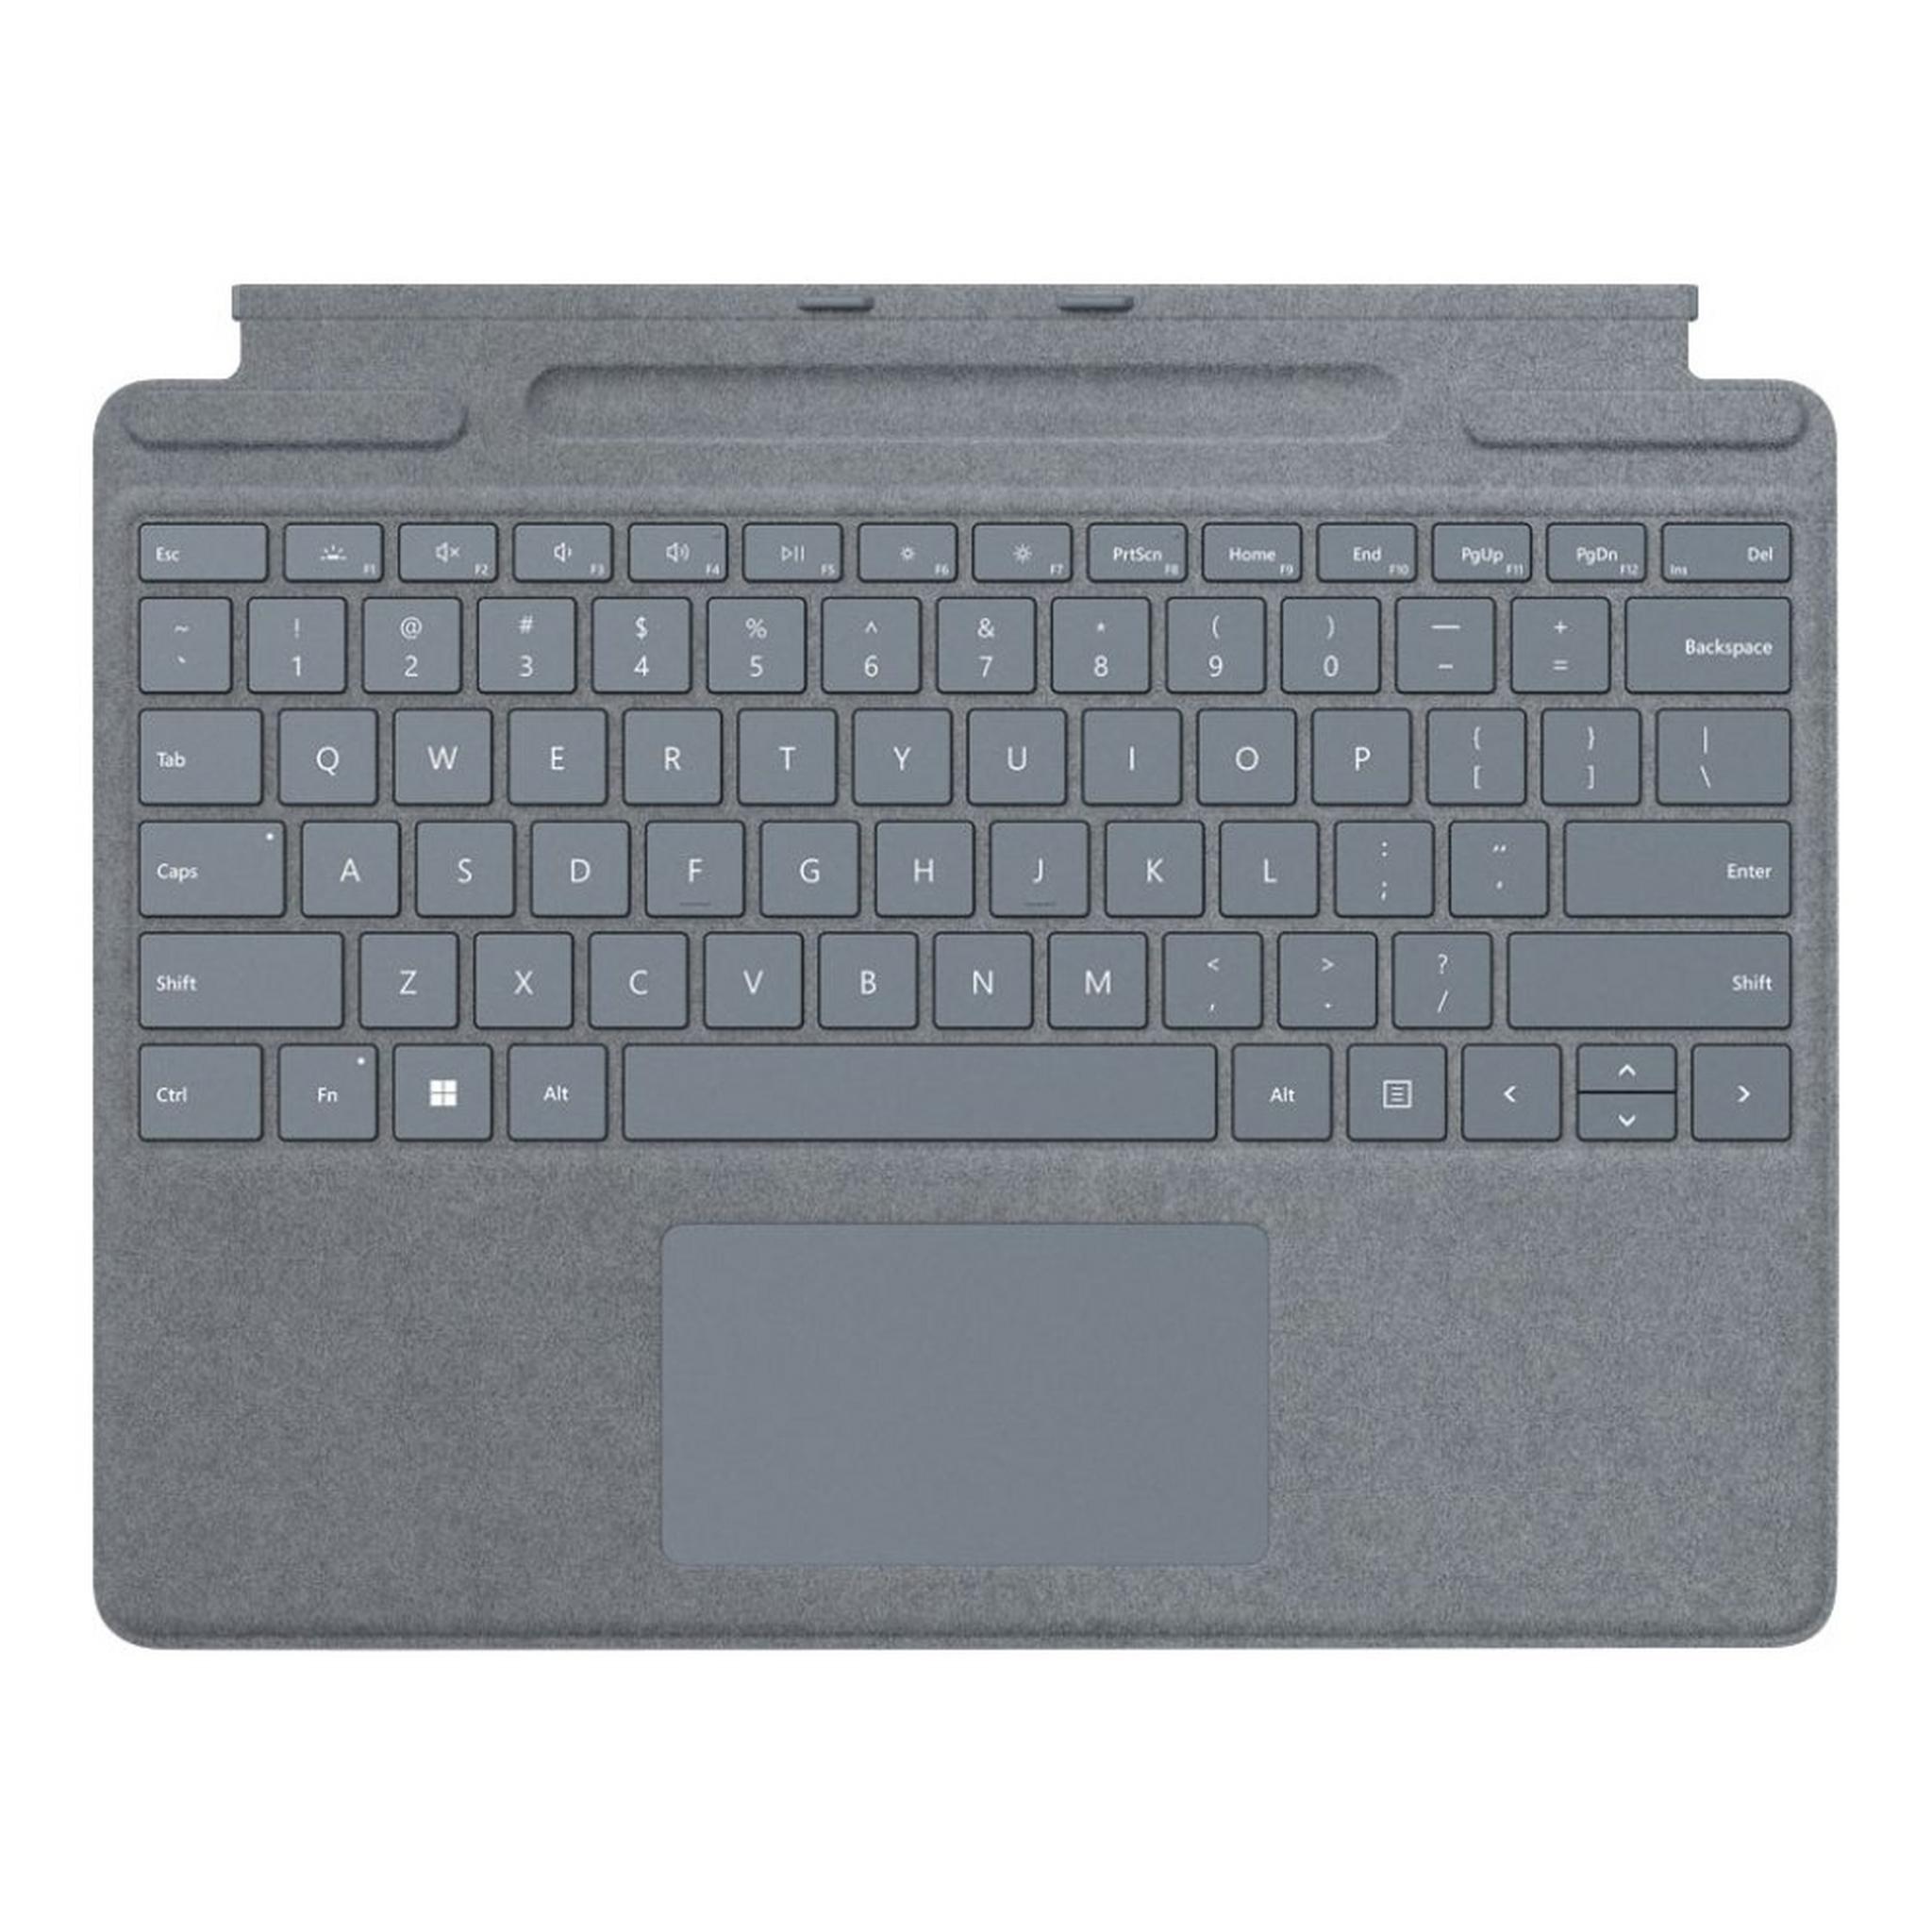 Microsoft Surface Pro Signature Keyboard - Ice Blue